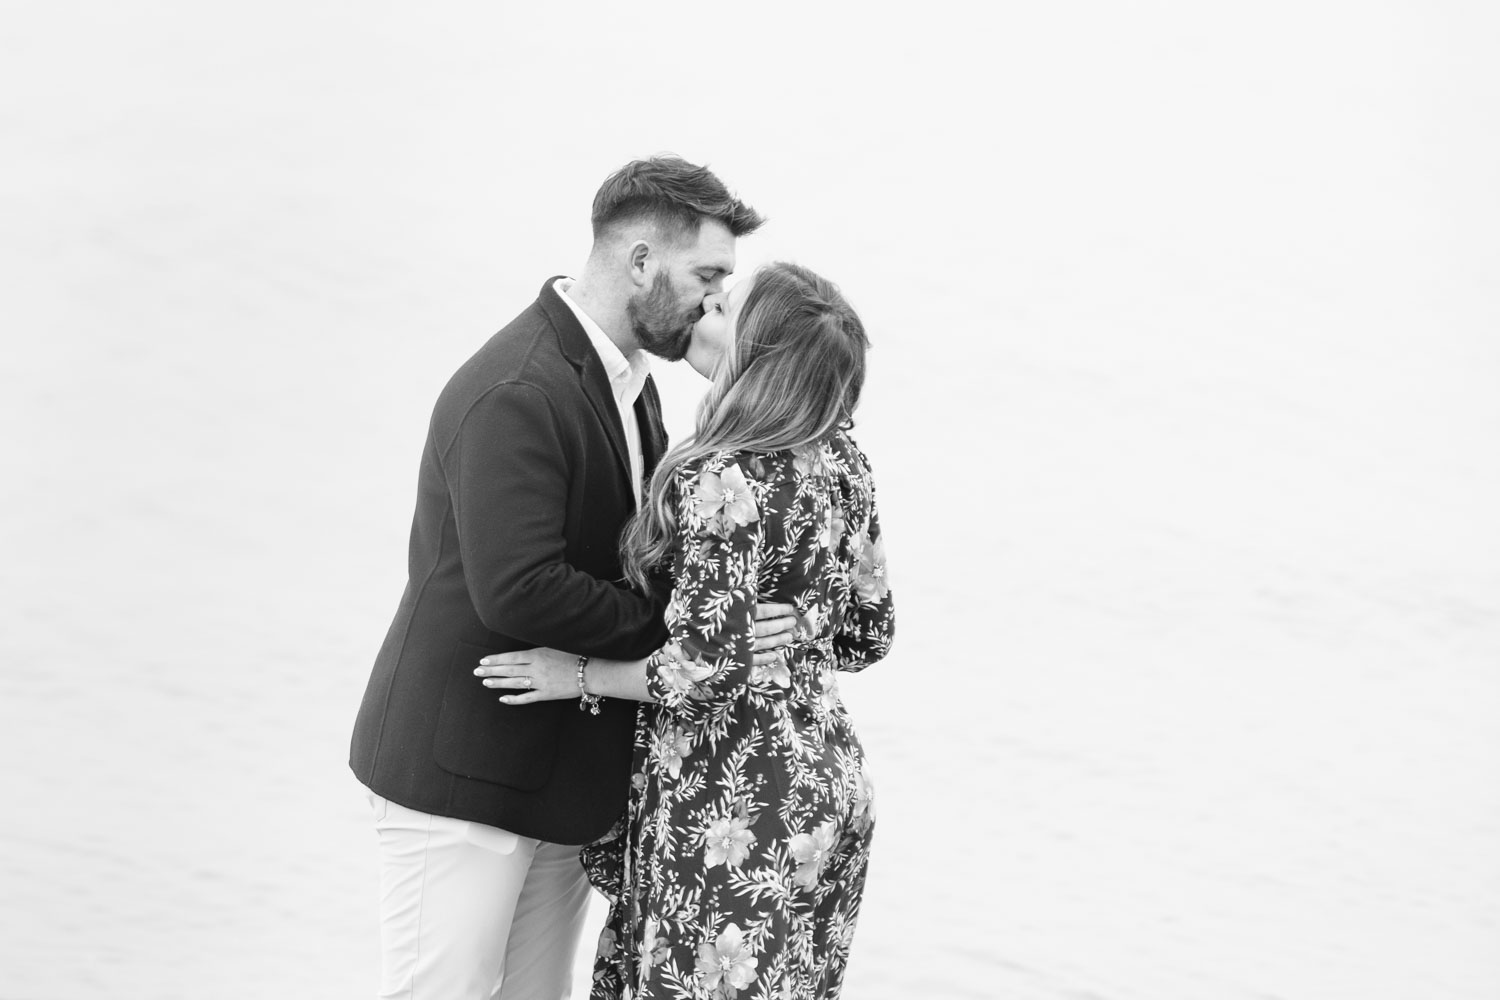 Man kissing woman after proposing